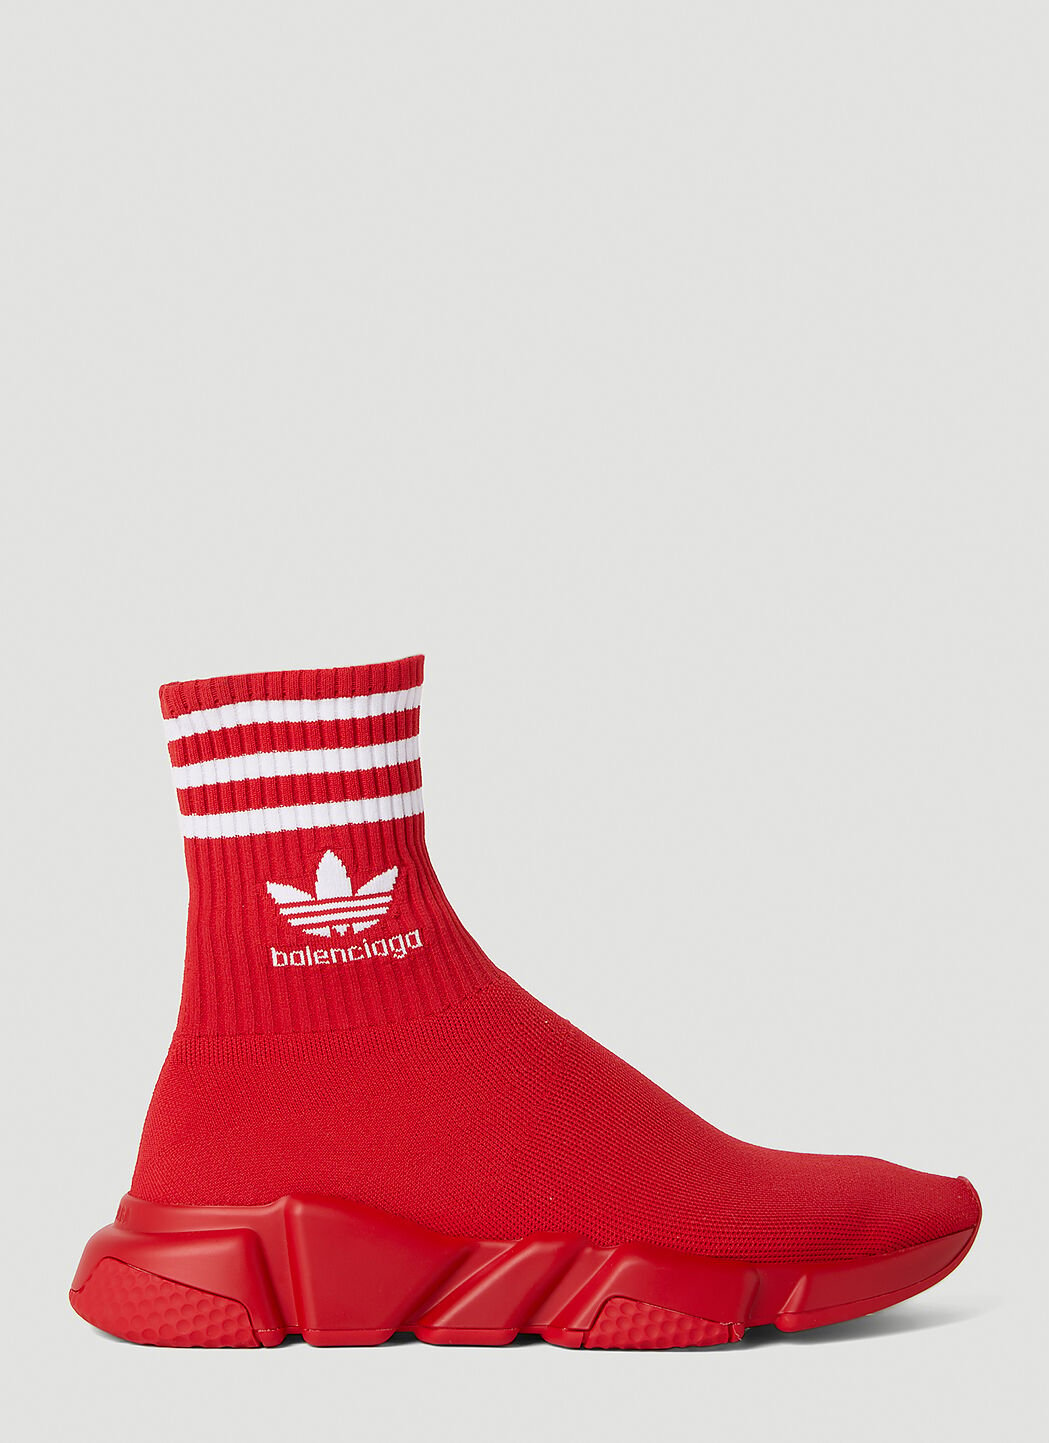 Balenciaga x adidas Speed Sneakers Red axb0251004